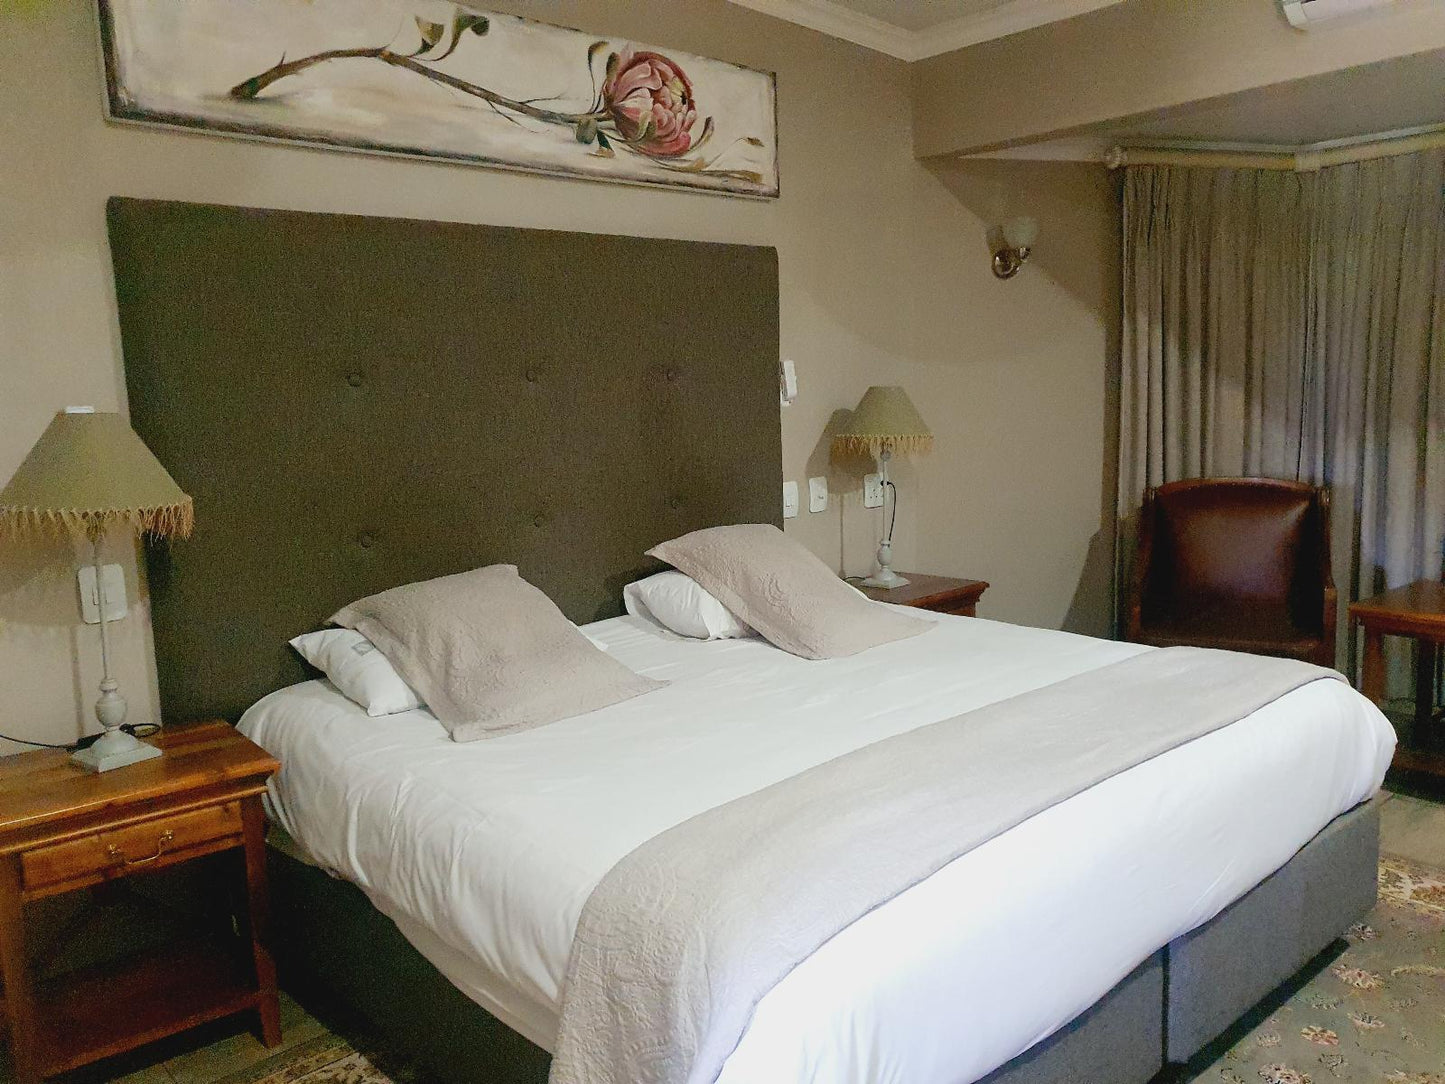 Luxury Rose Room 5 @ Fairview Hotels, Spa & Golf Resort